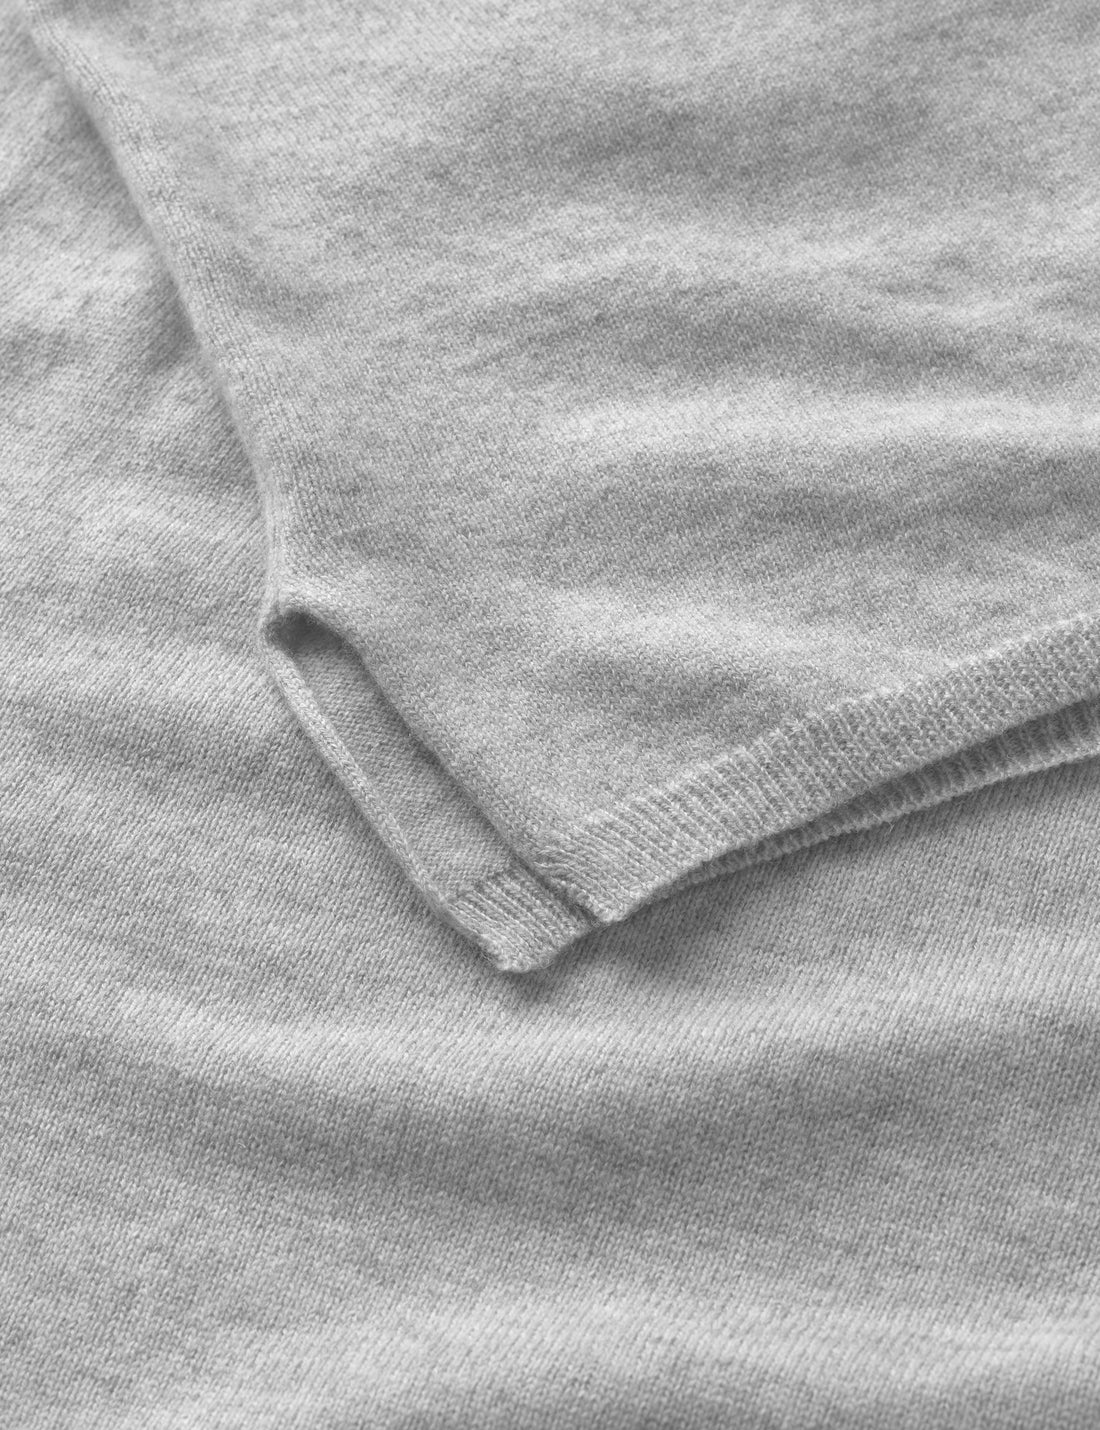 Augusta knit light grey melange